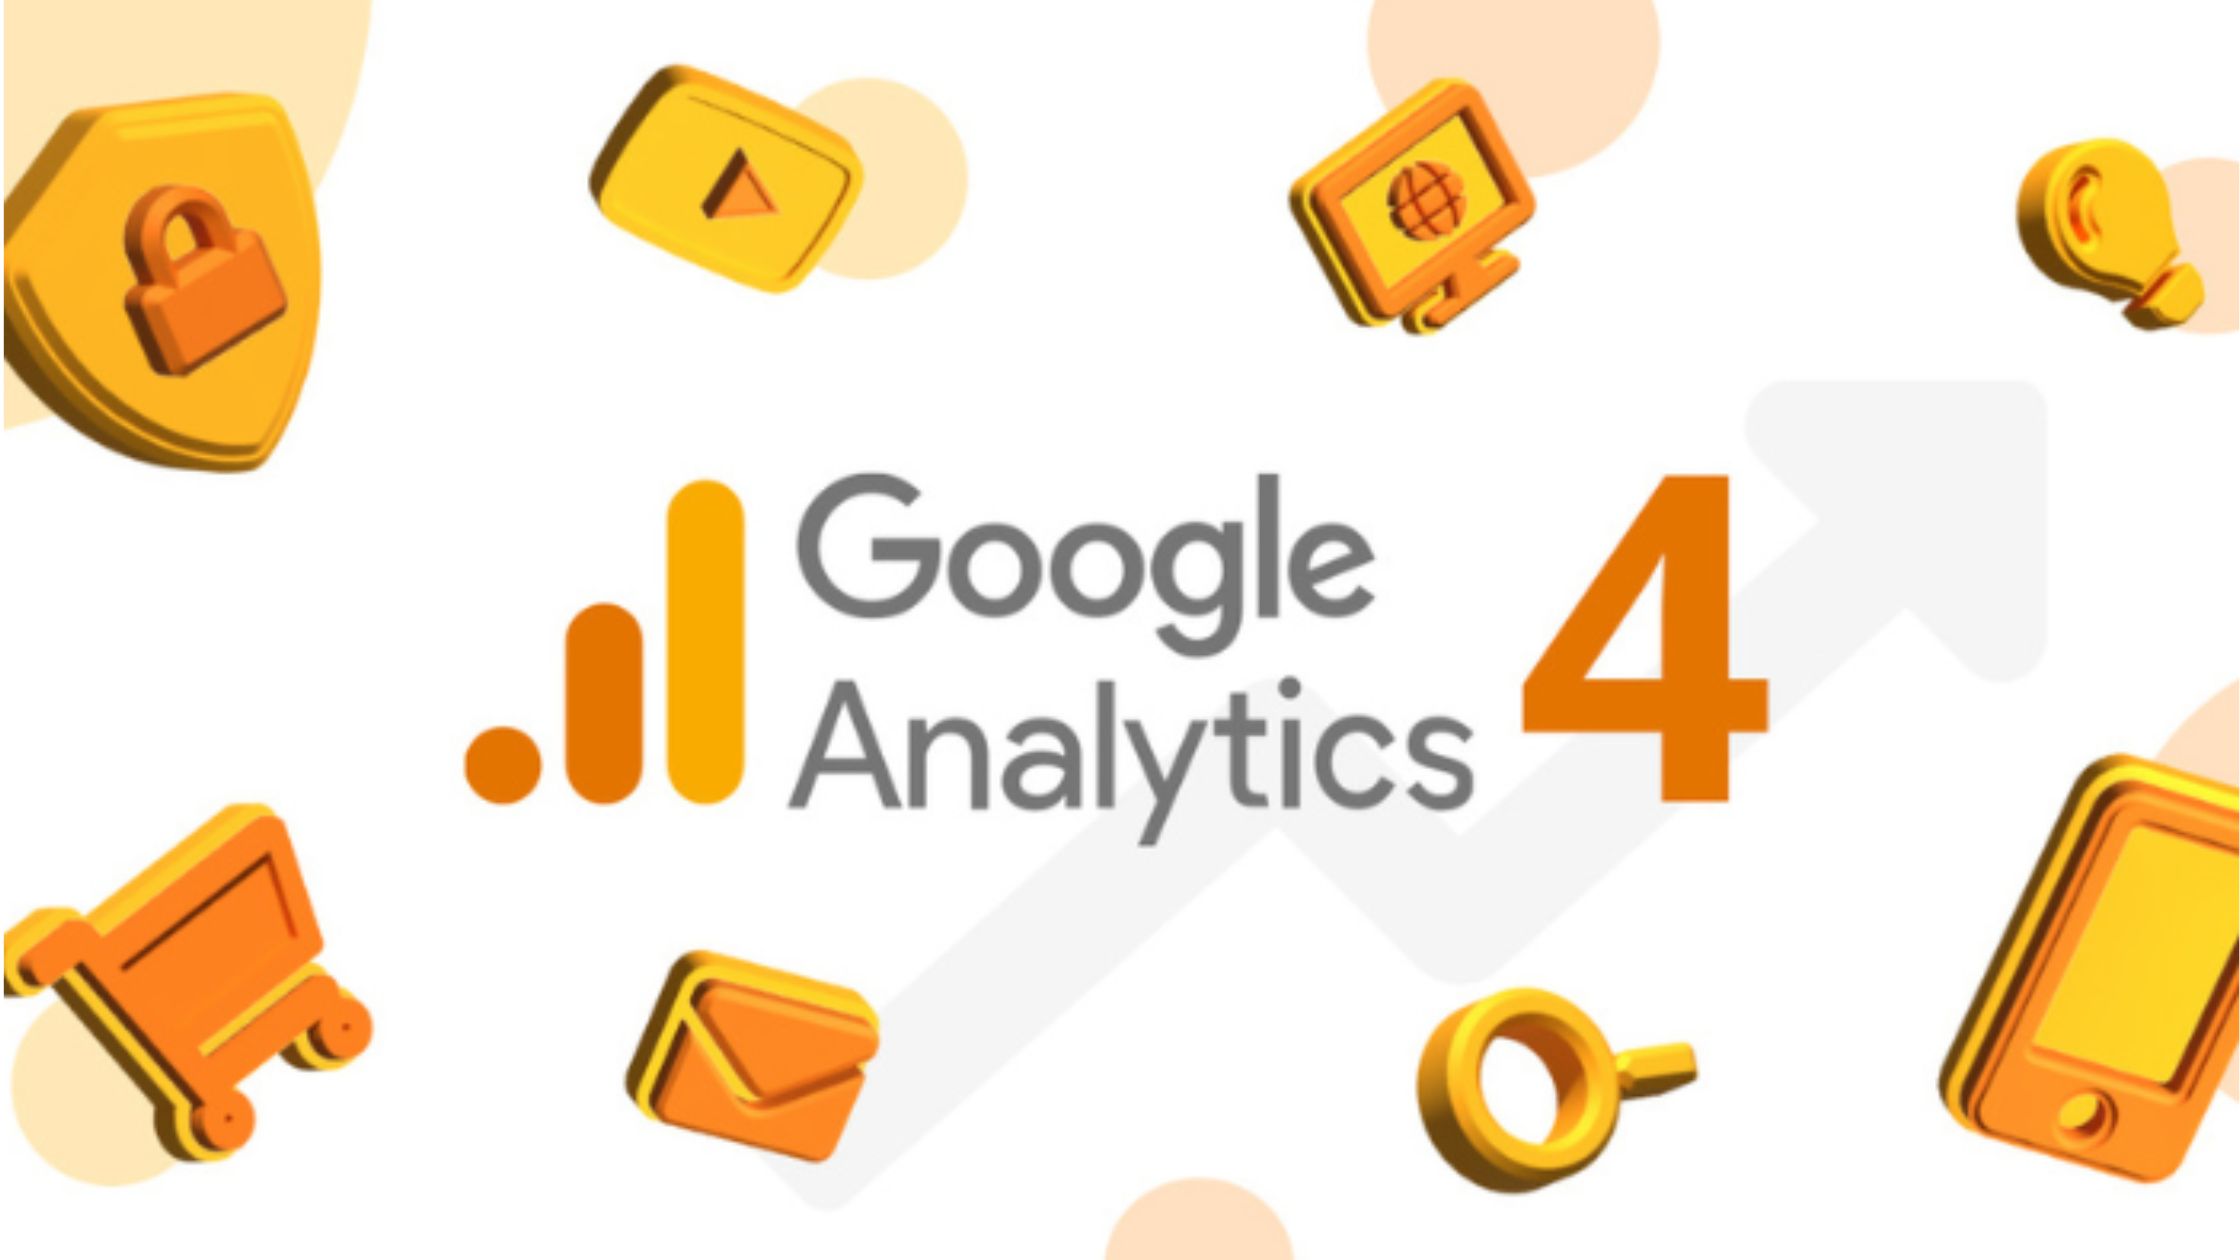 What is Google Analytics 4?